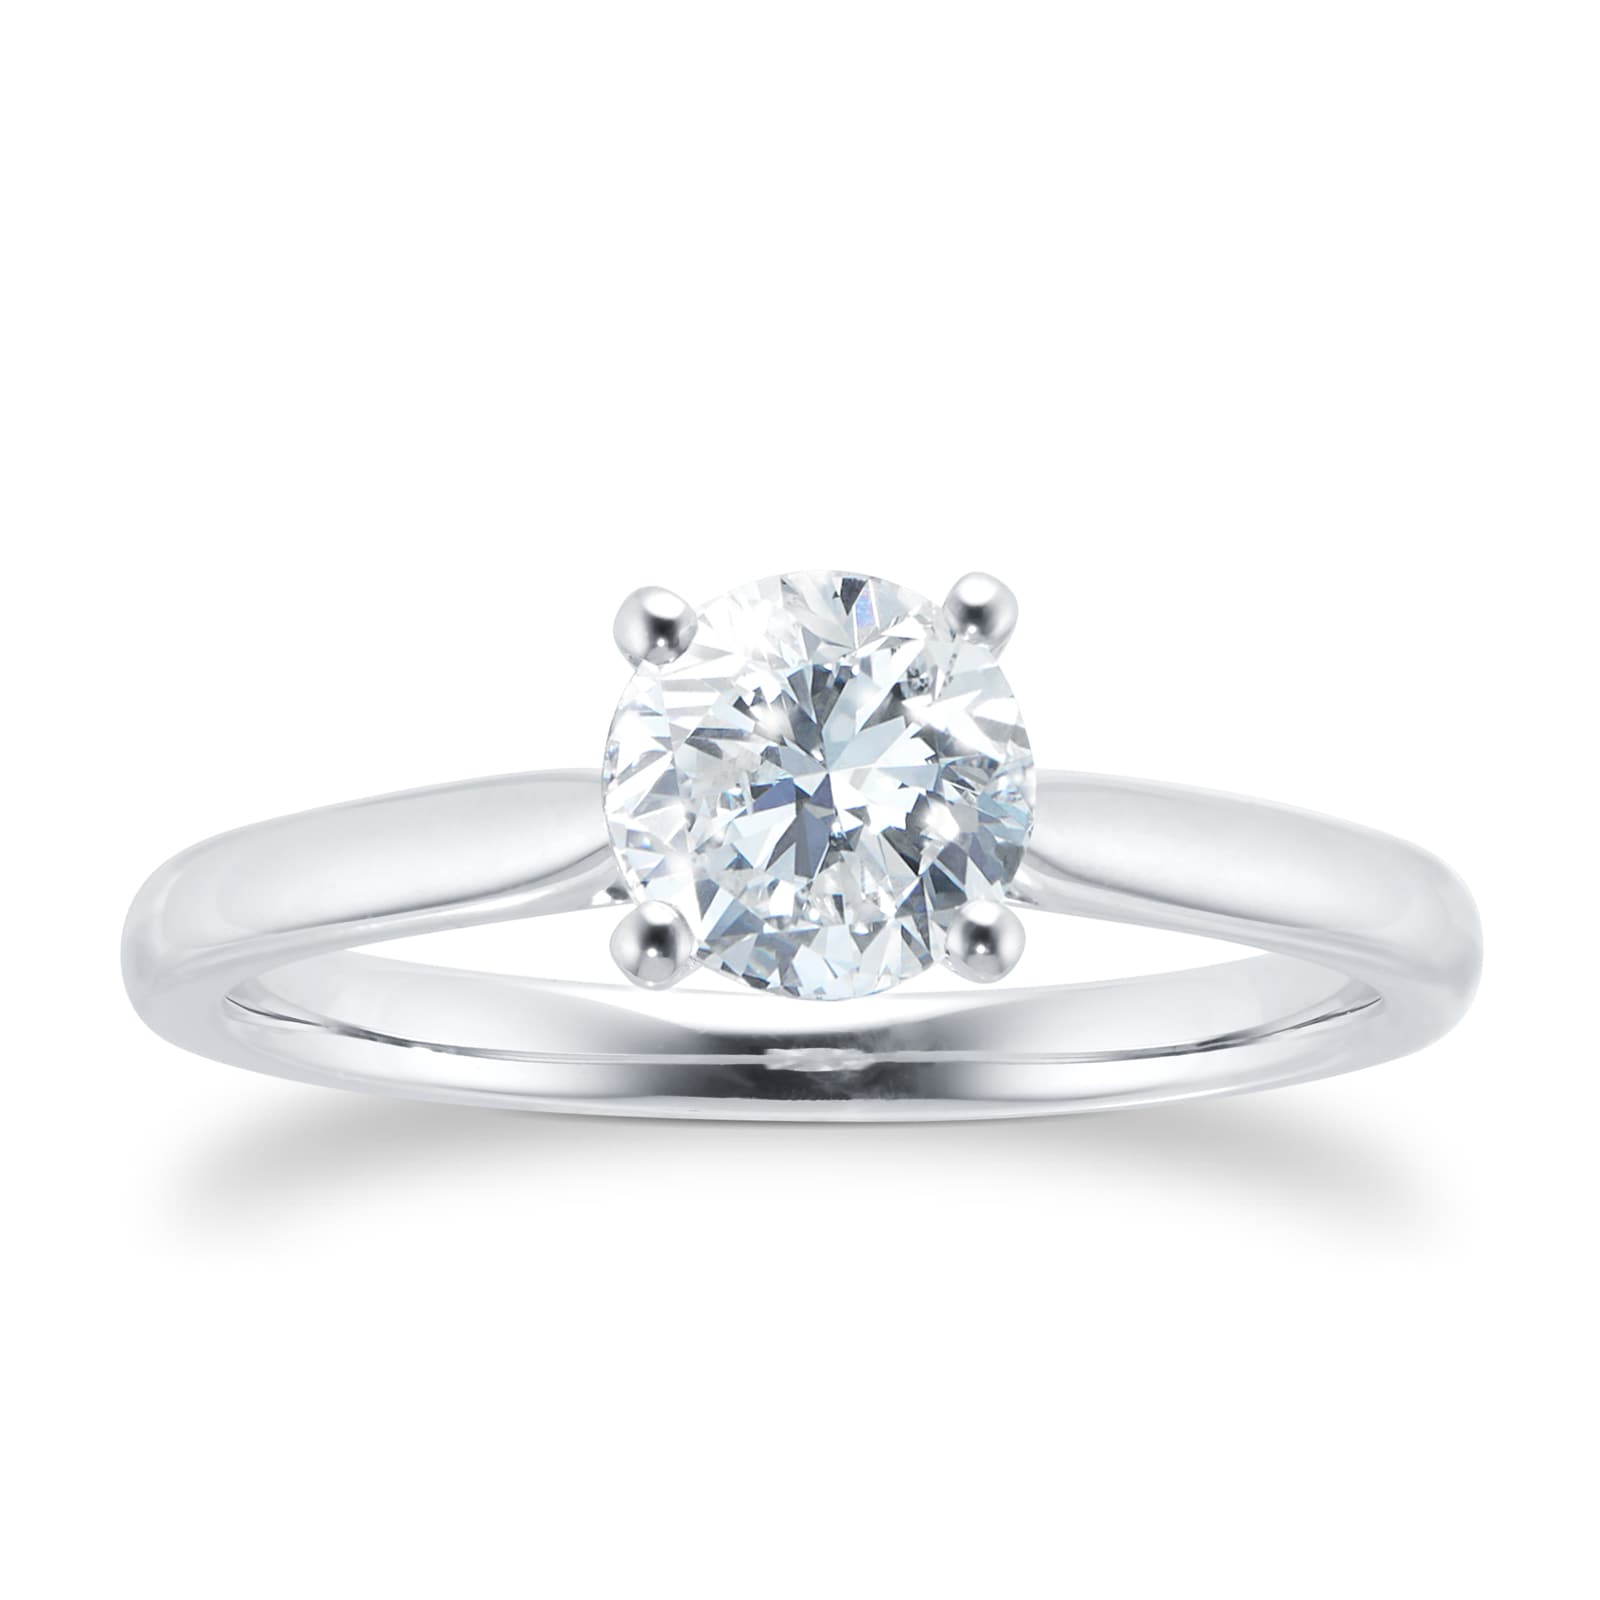 Platinum 1.00ct Solitaire Engagement Ring - Ring Size M